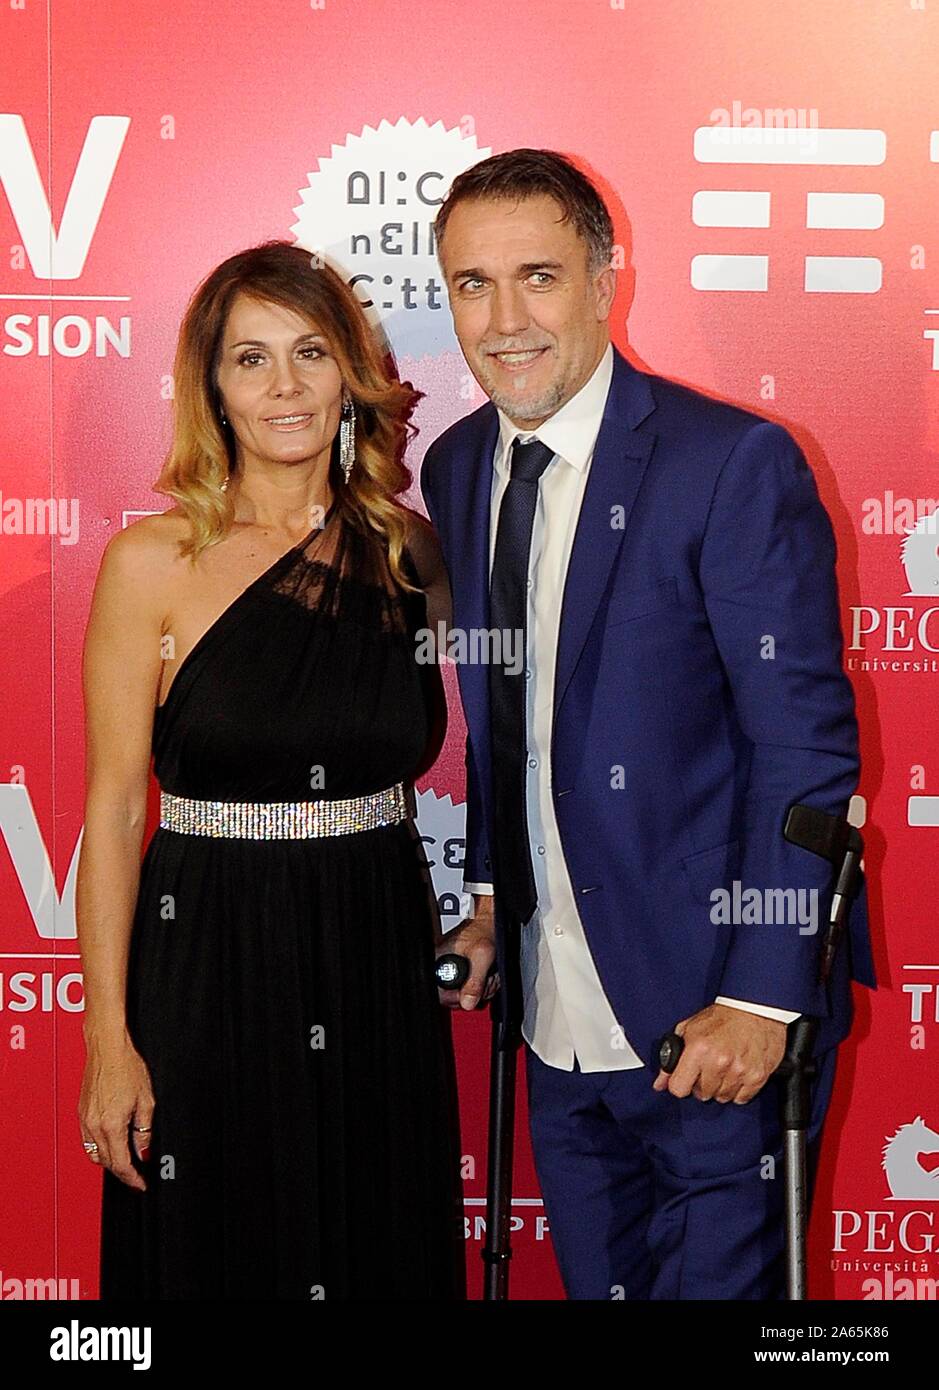 * NO DAILY * Rome, Gabriel Batistuta evening with film presentation at the Film Festival. In the photo: Gabriel Batistuta with his wife Irina Fernandez. Stock Photo